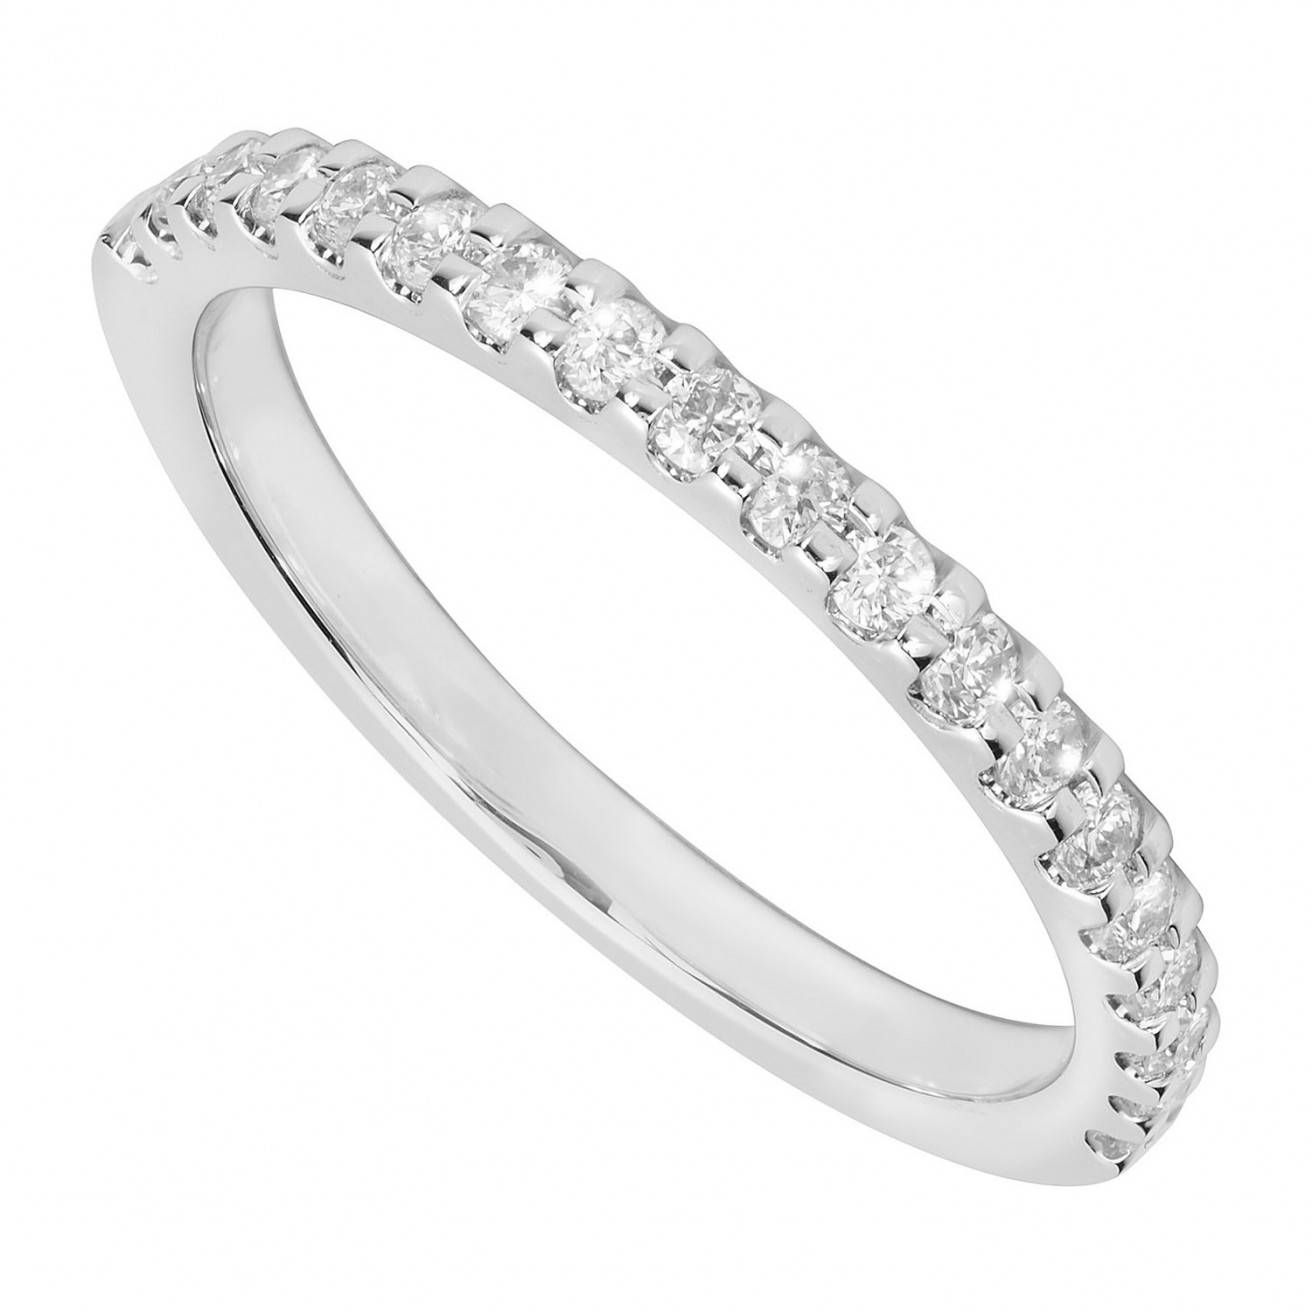 Buy Platinum Wedding Bands Online – Fraser Hart Intended For Diamond Platinum Wedding Rings (View 2 of 15)